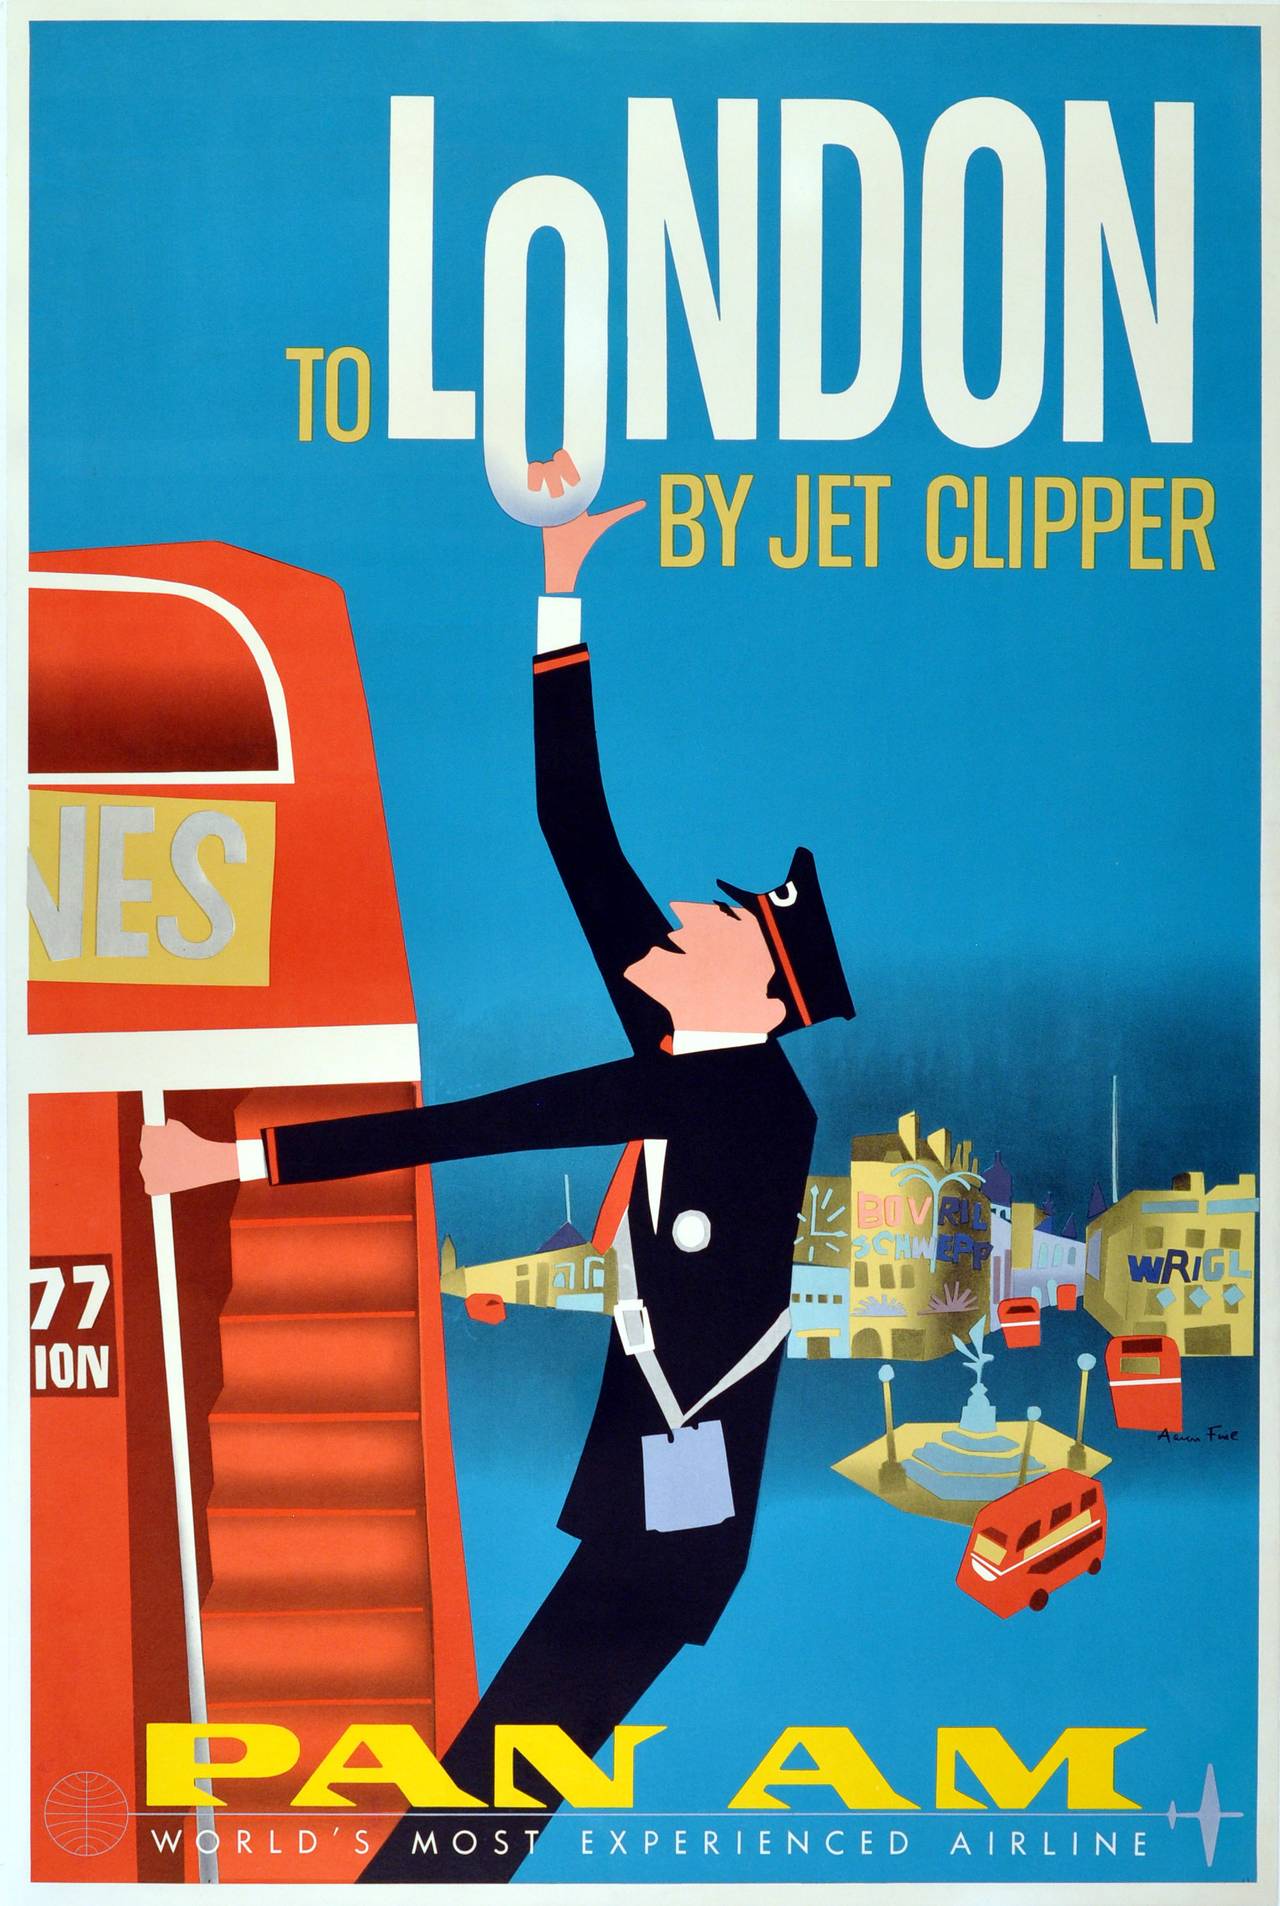 Aaron Fine - Original Vintage Travel Advertising Poster - London by Jet